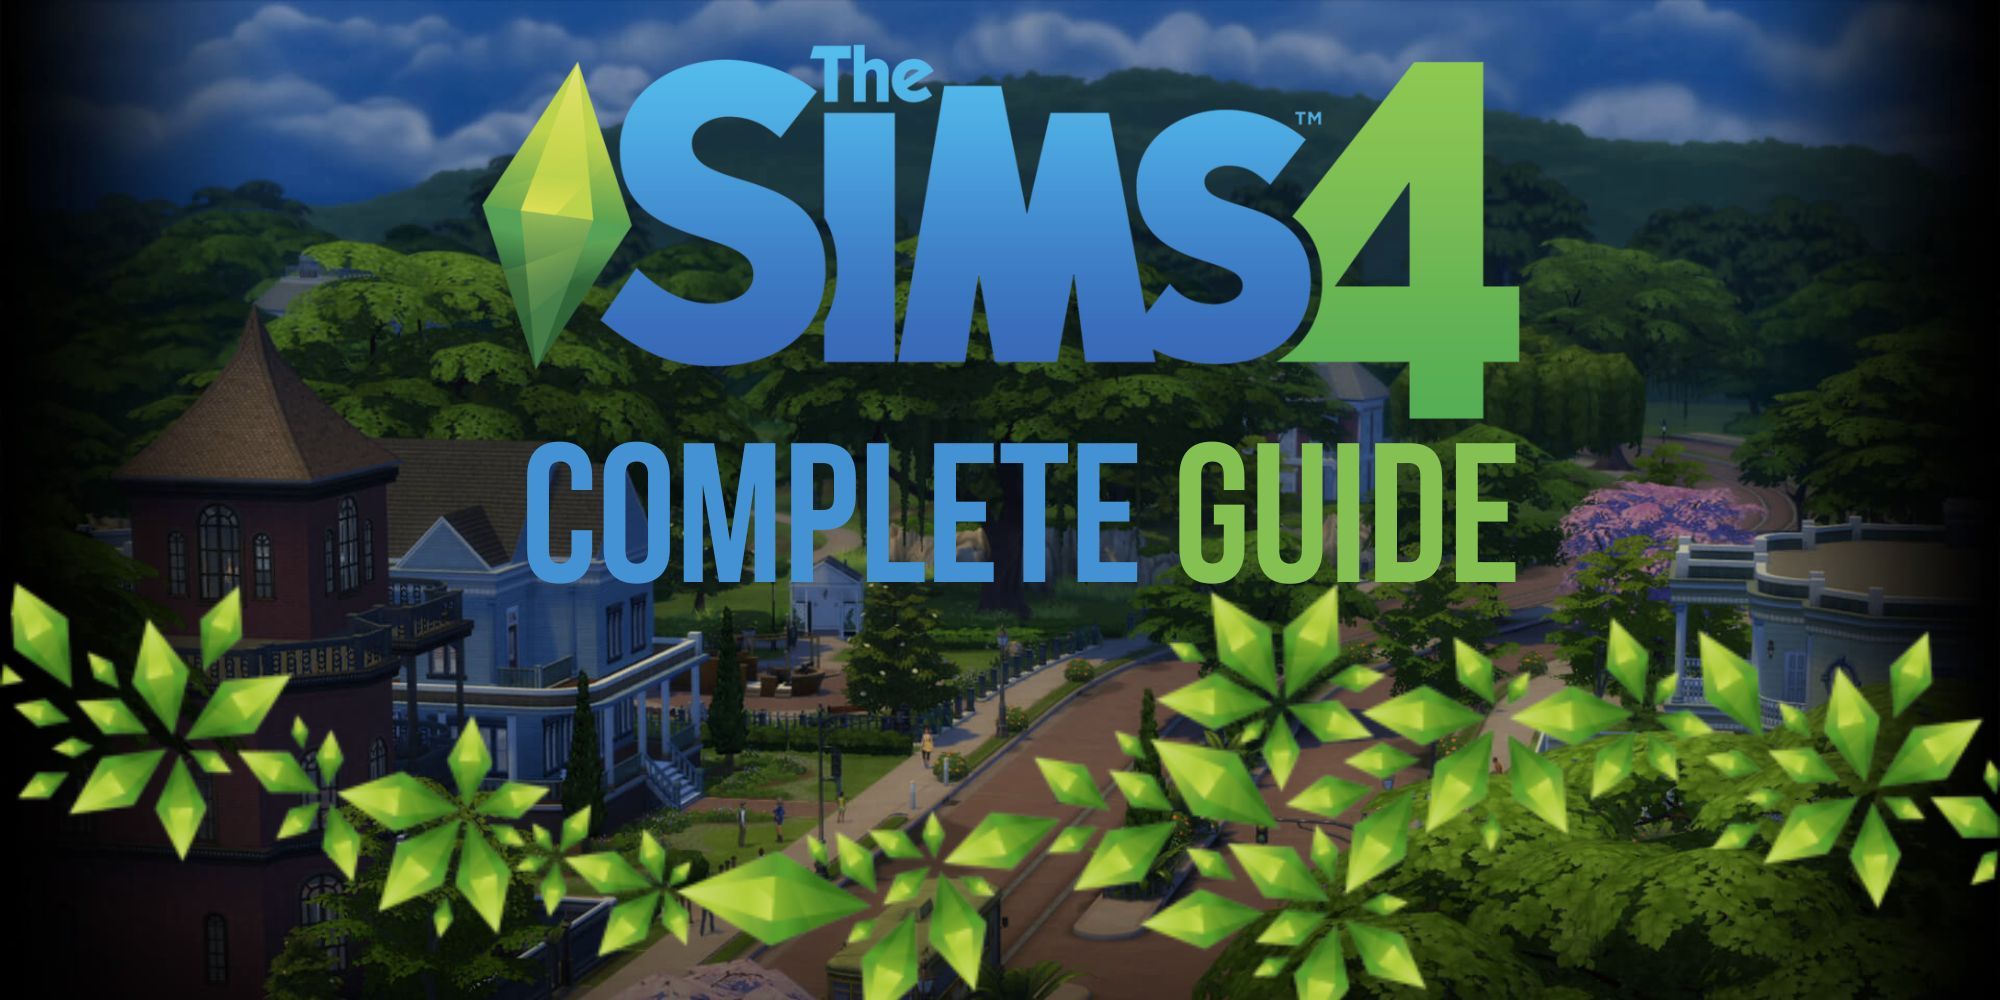 Gameplay, Cheats, Skill, and Career Guides at Carl's Sims 4 Guide